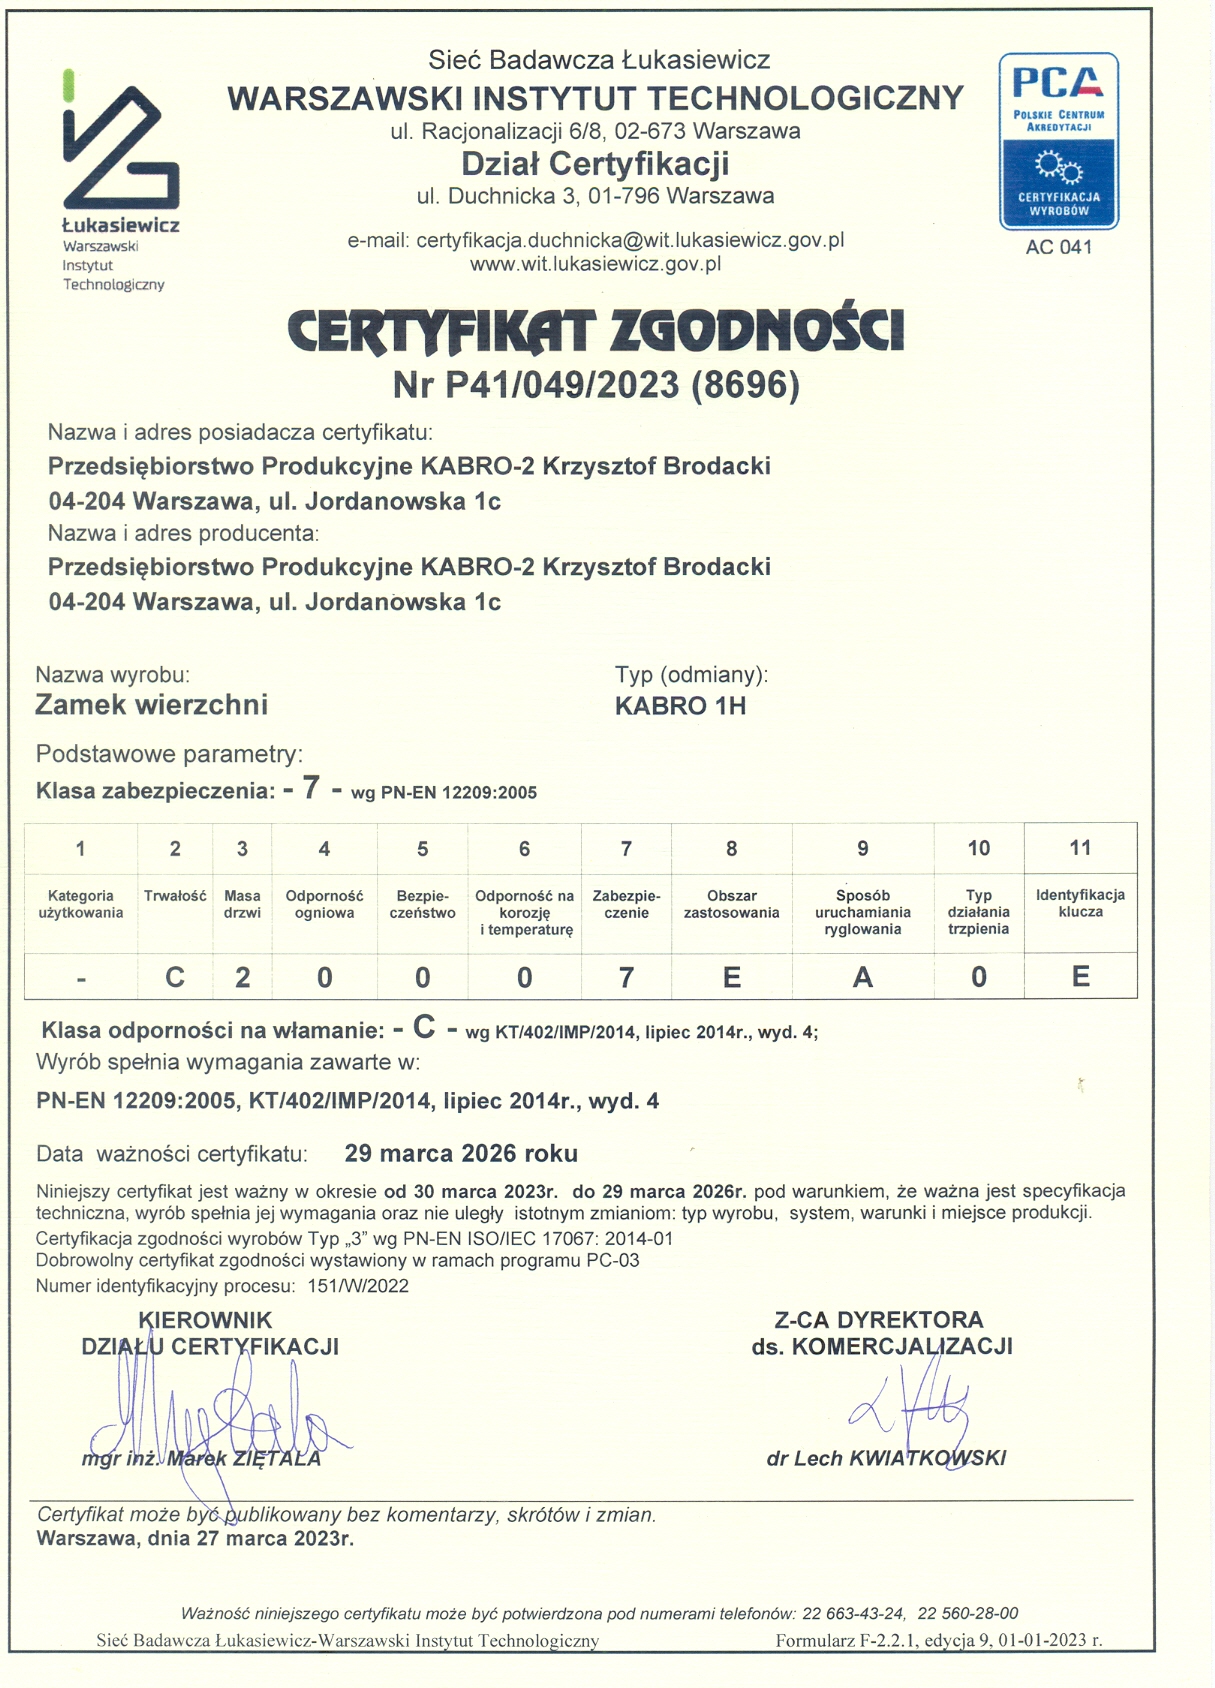 Certyfikat dla zamka KABRO 1H